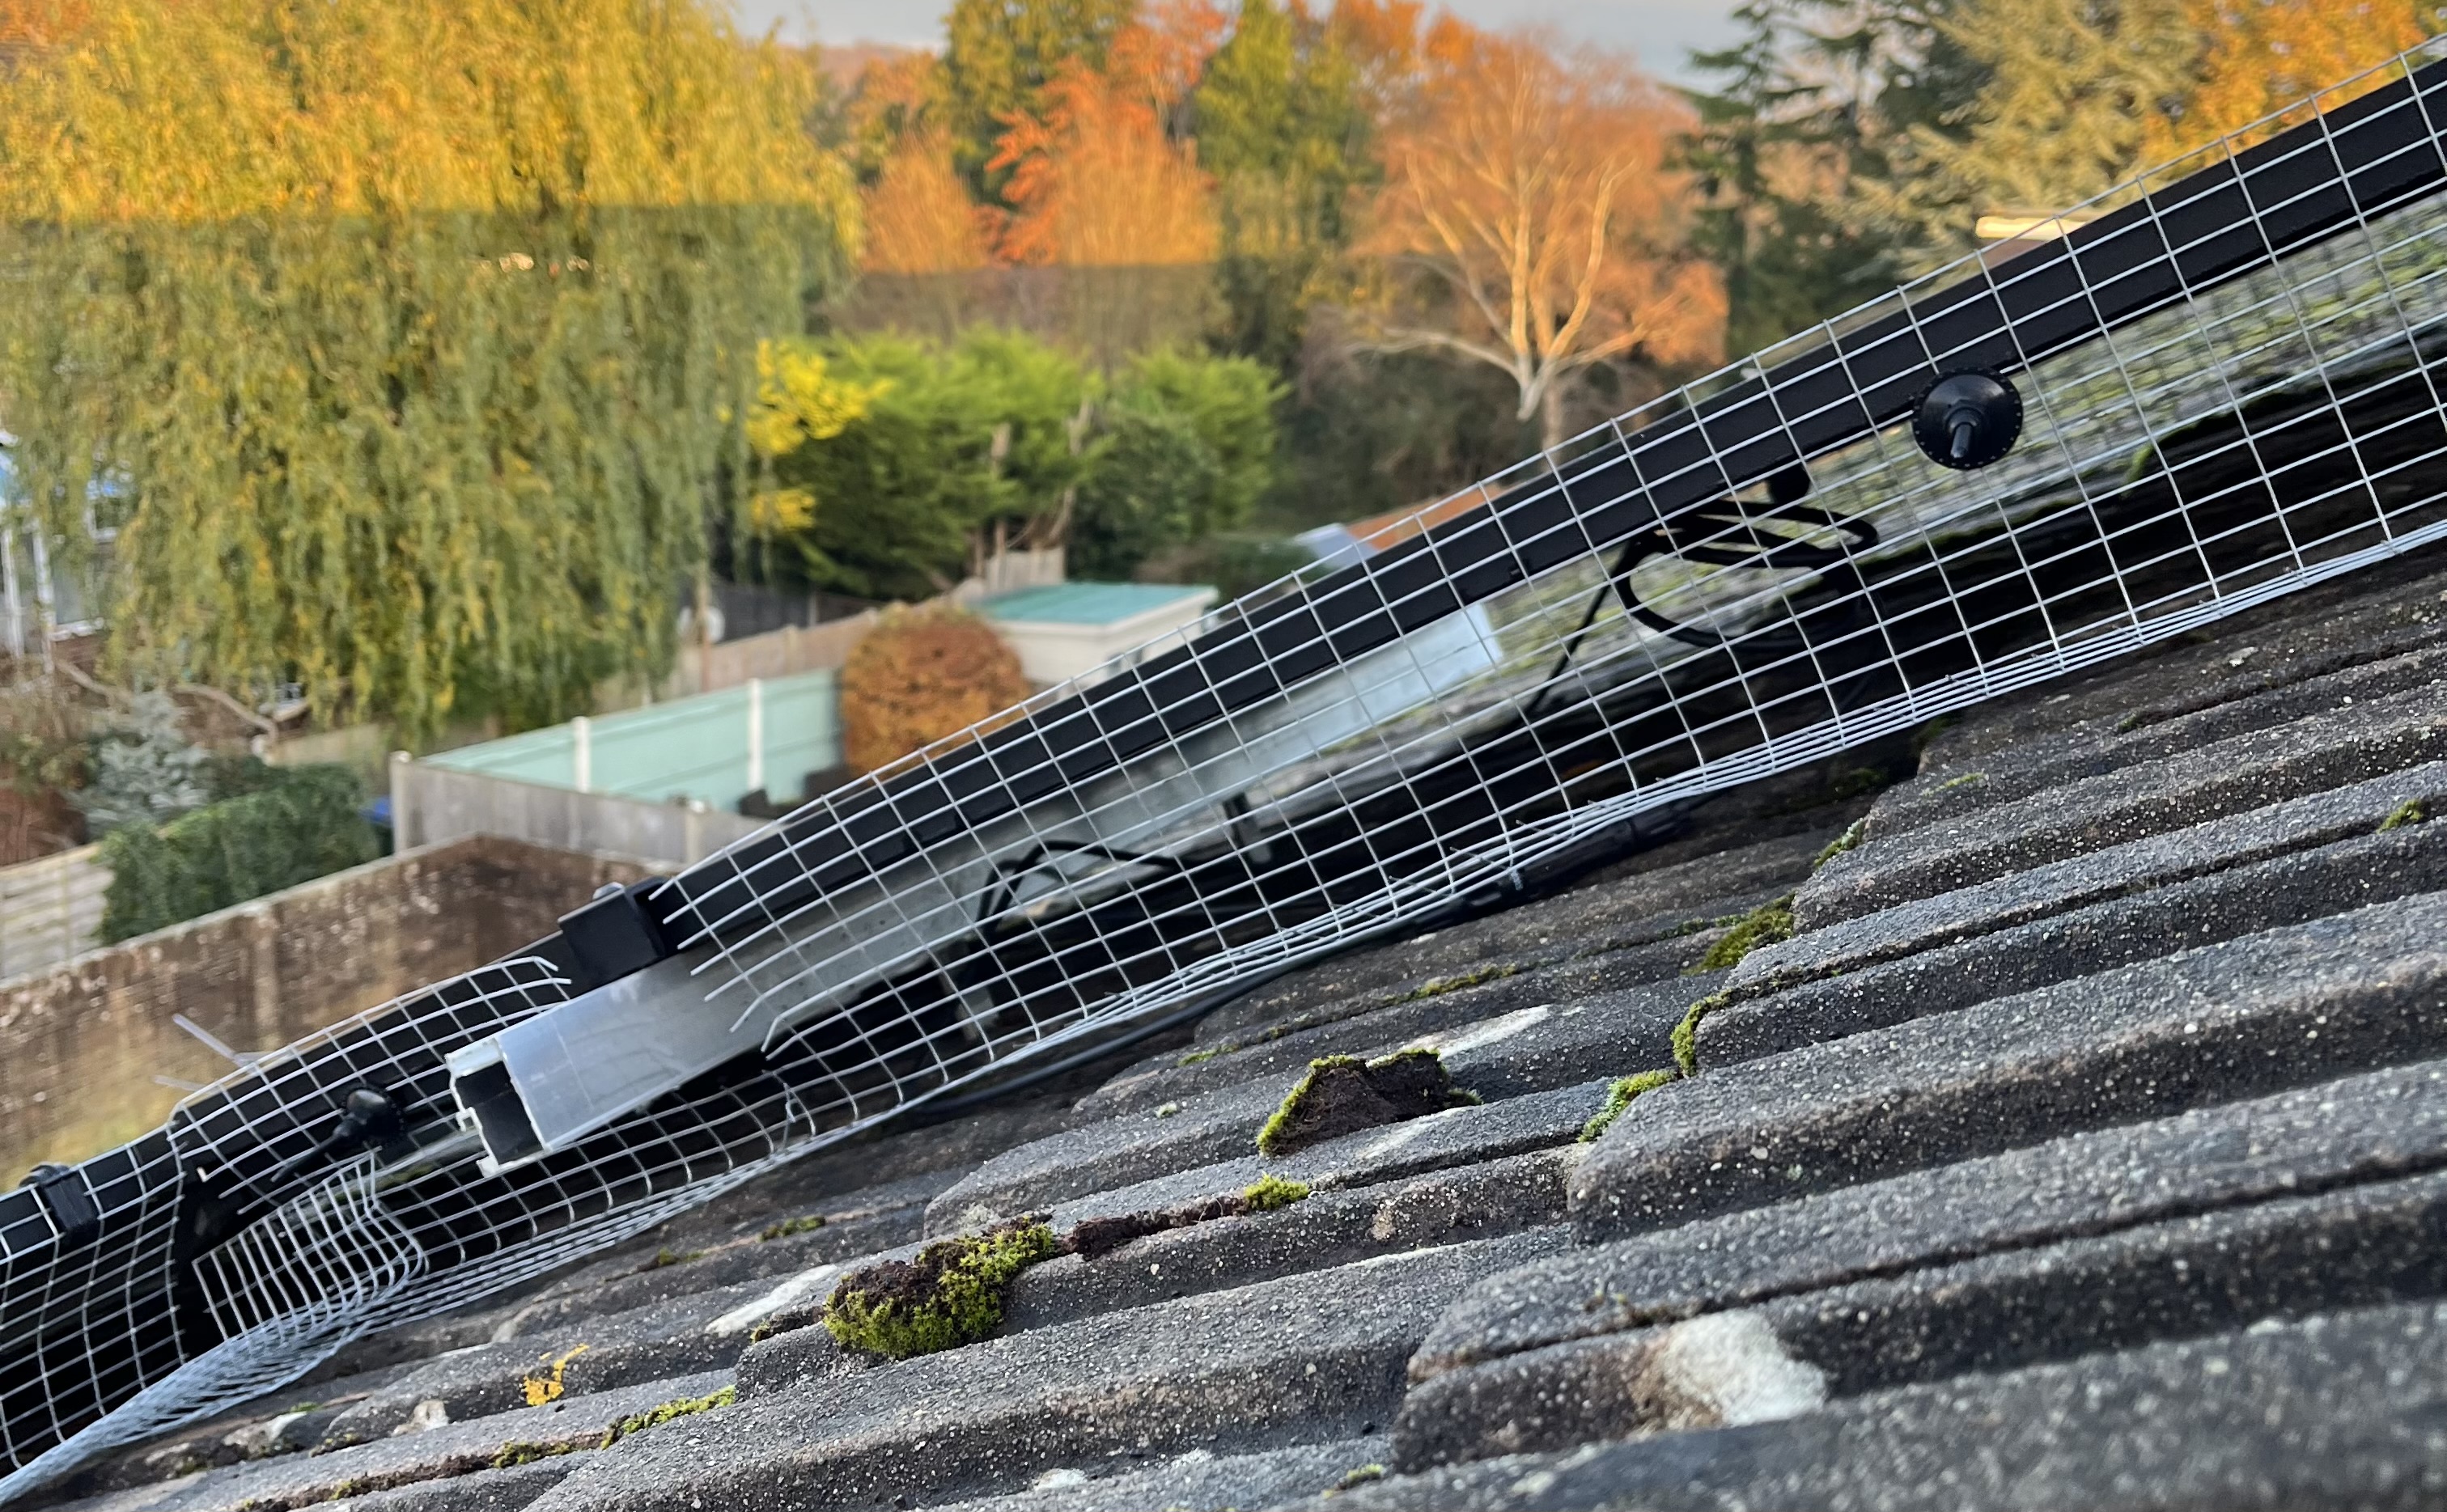 Bird Proofing solar panels in Shirley, Southampton